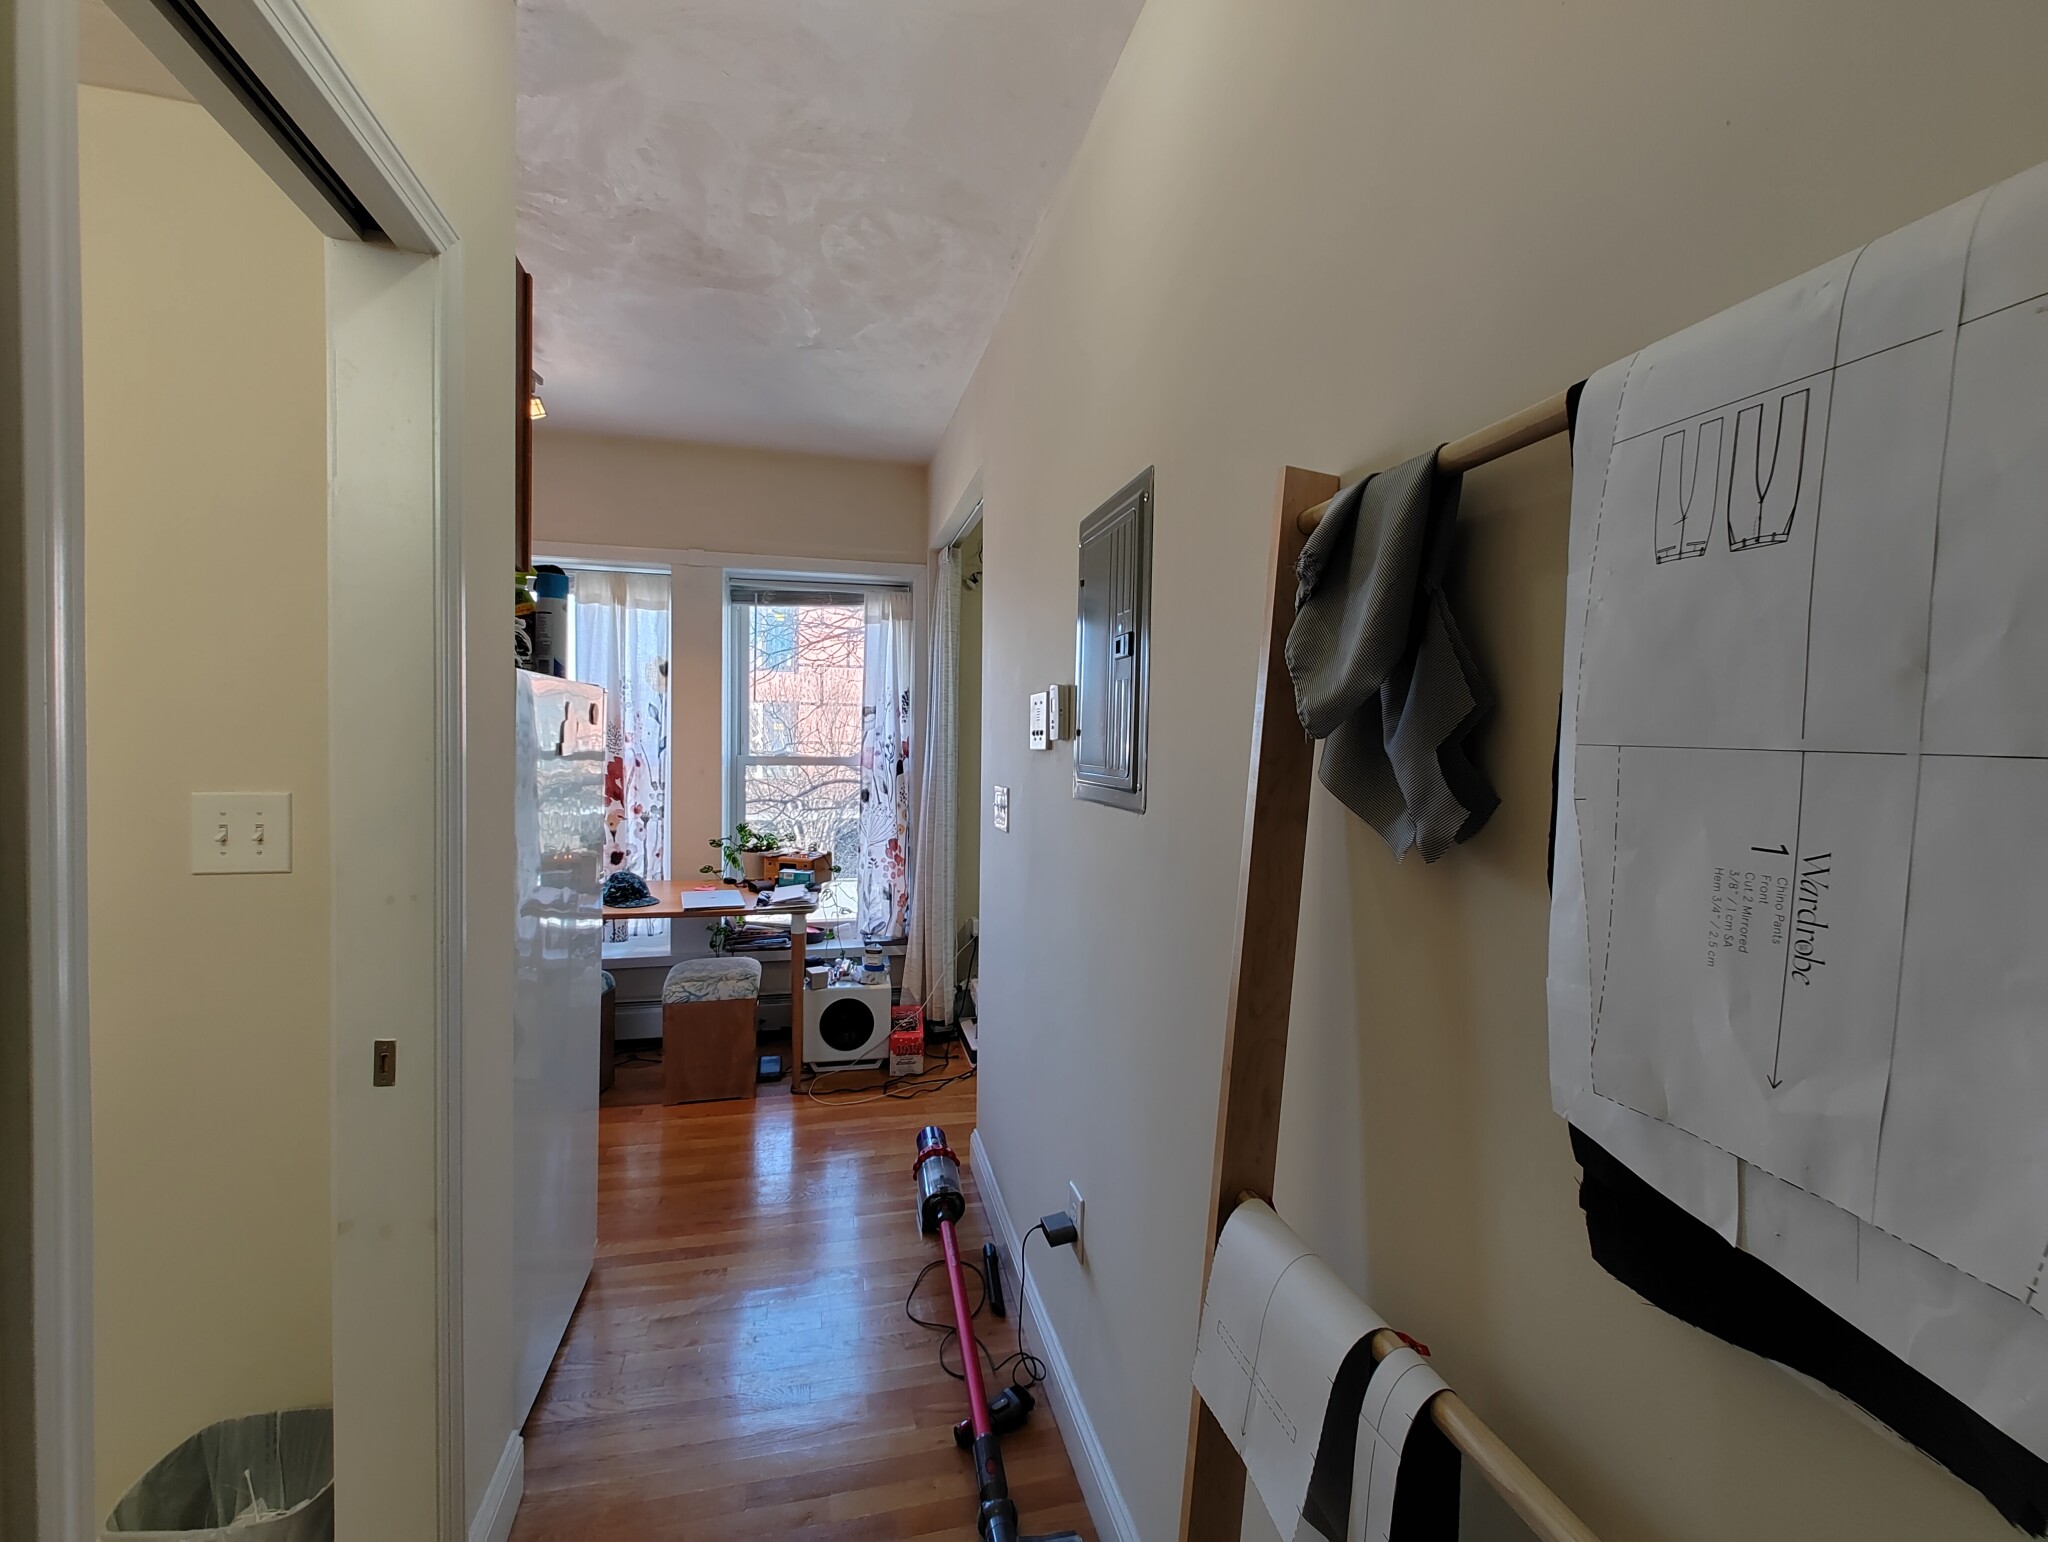 Photos of apartment on Cambridge St.,Cambridge MA 02139